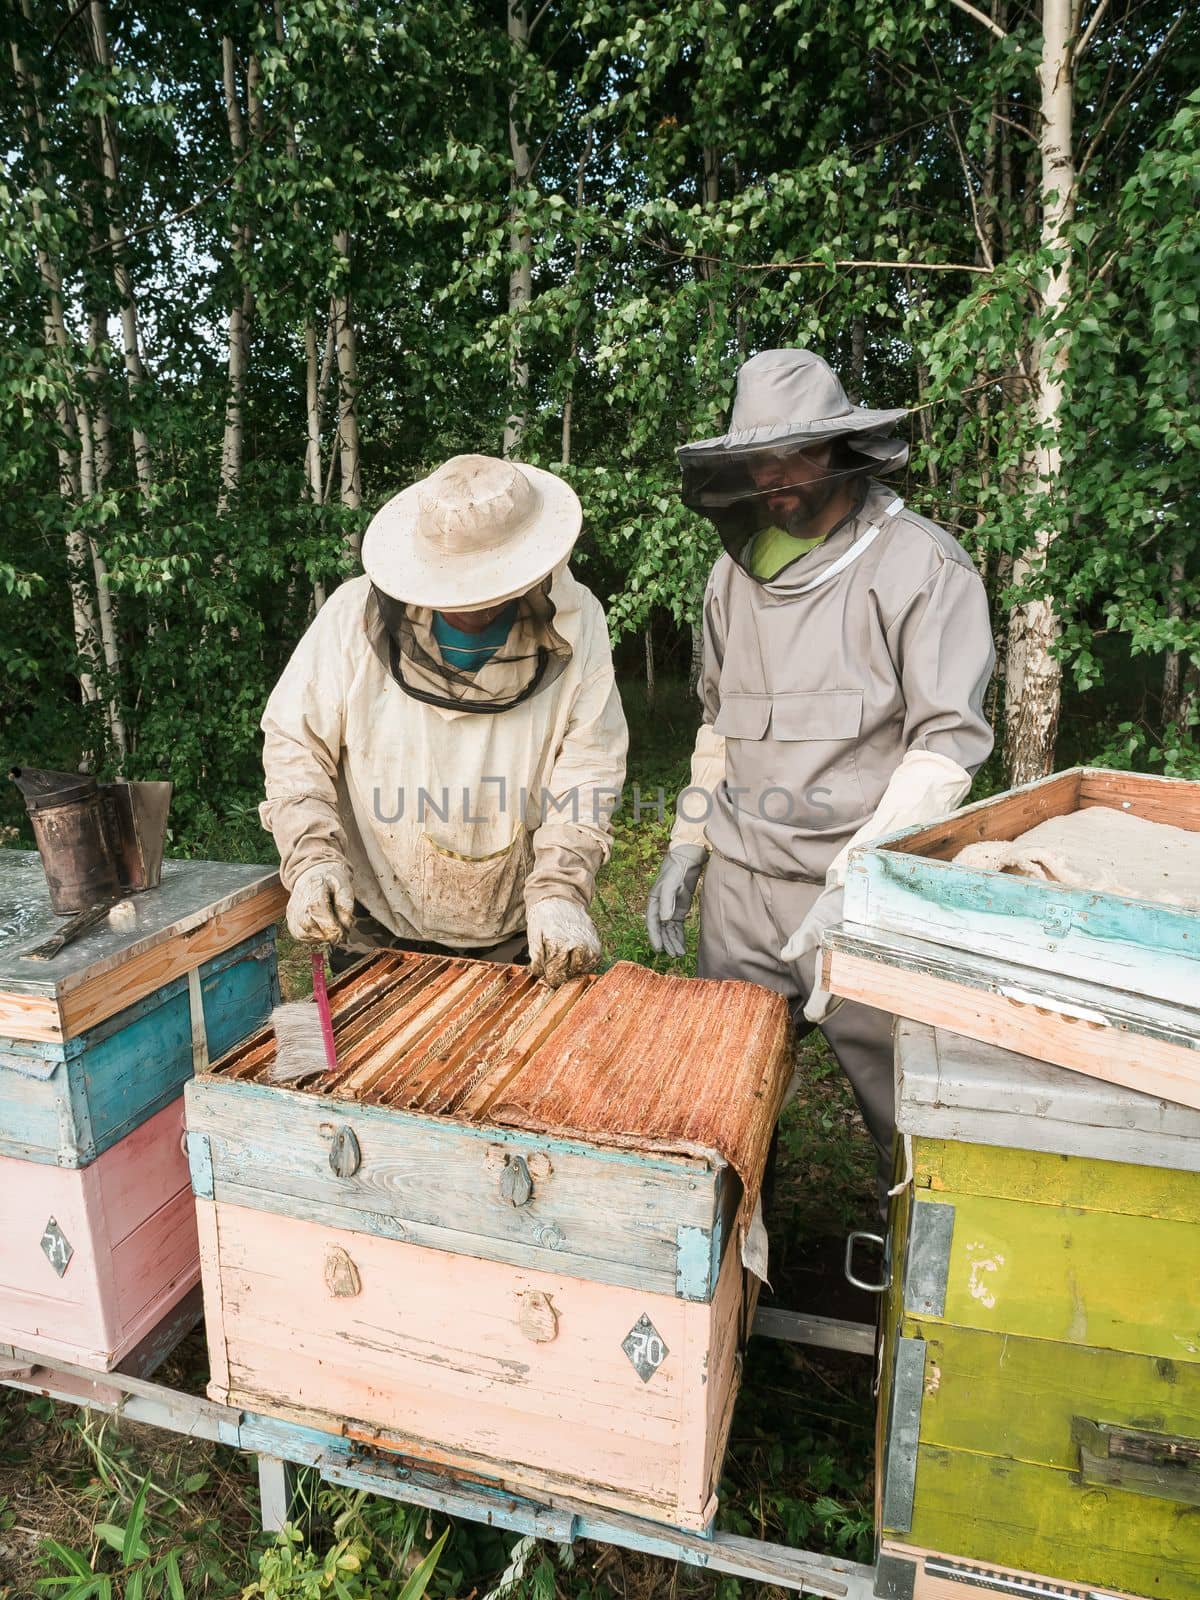 Beekeeper working in his apiary on a bee farm, beekeeping